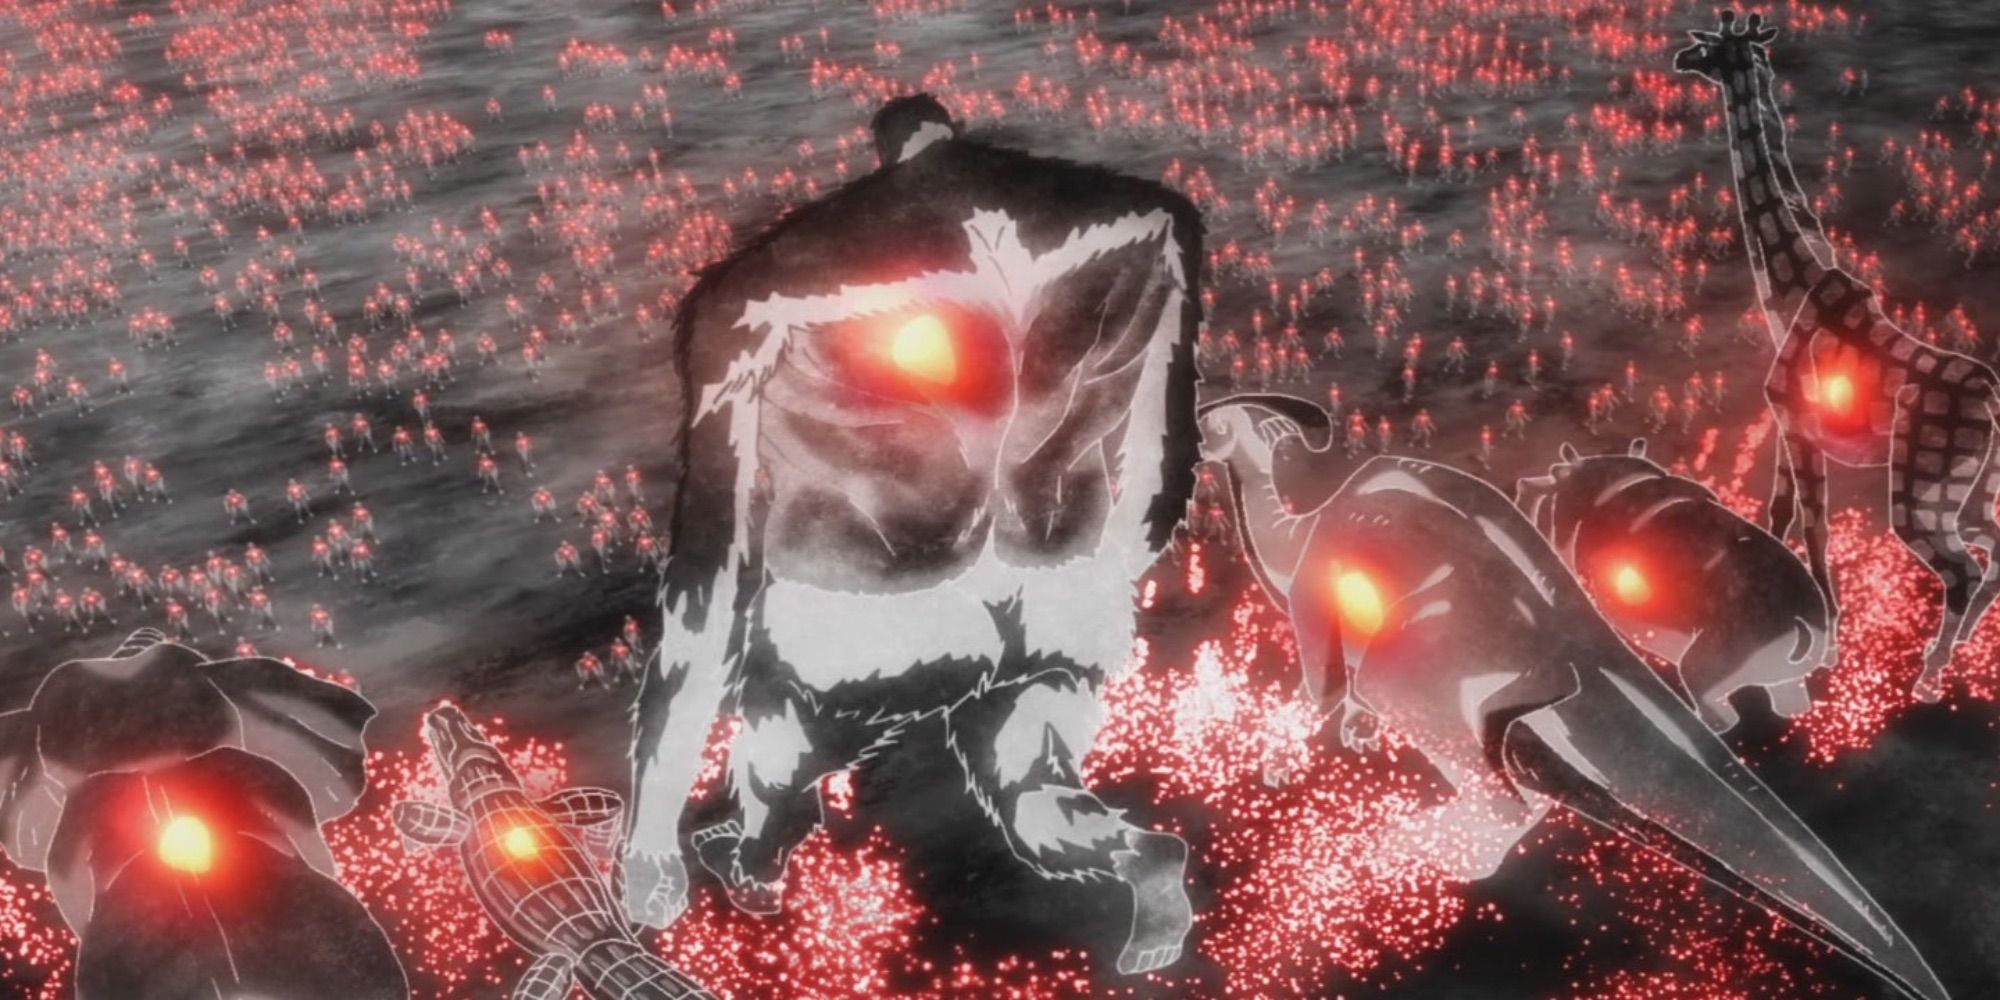 Attack on Titan Season 2 intro enemies swarm with beating hearts